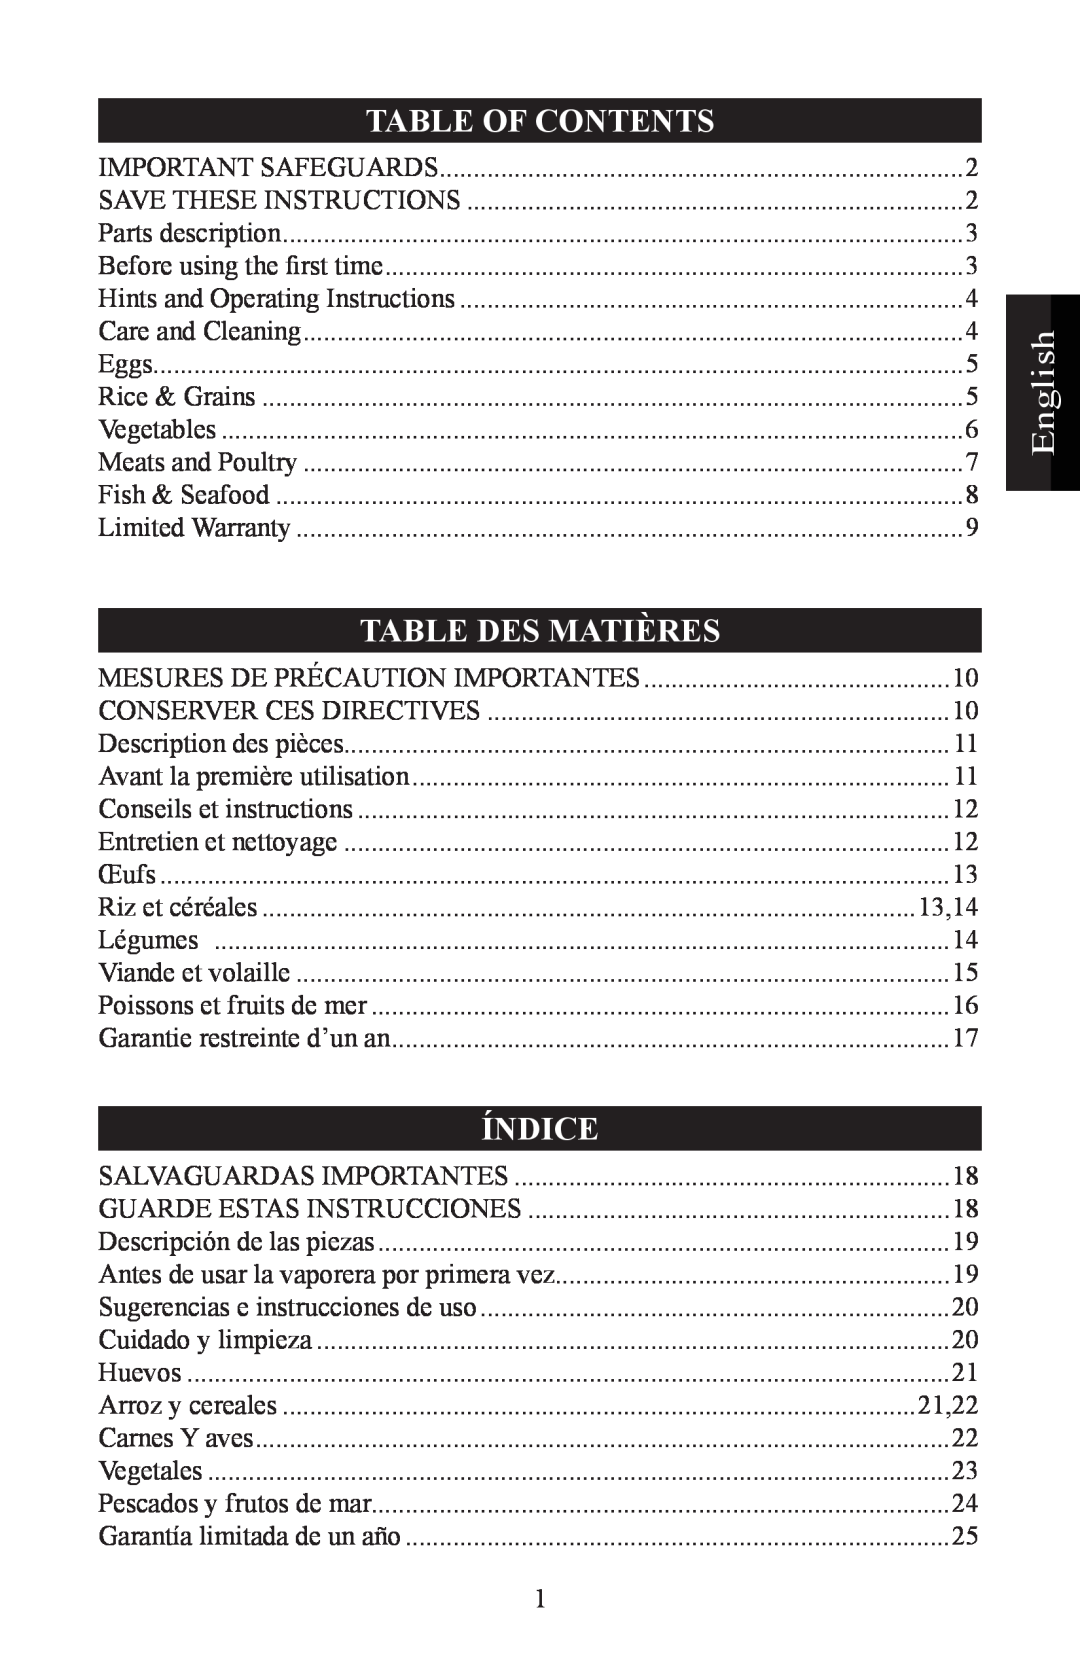 Nesco ST-24 manual English, Table Of Contents, Table Des Matières, Índice 